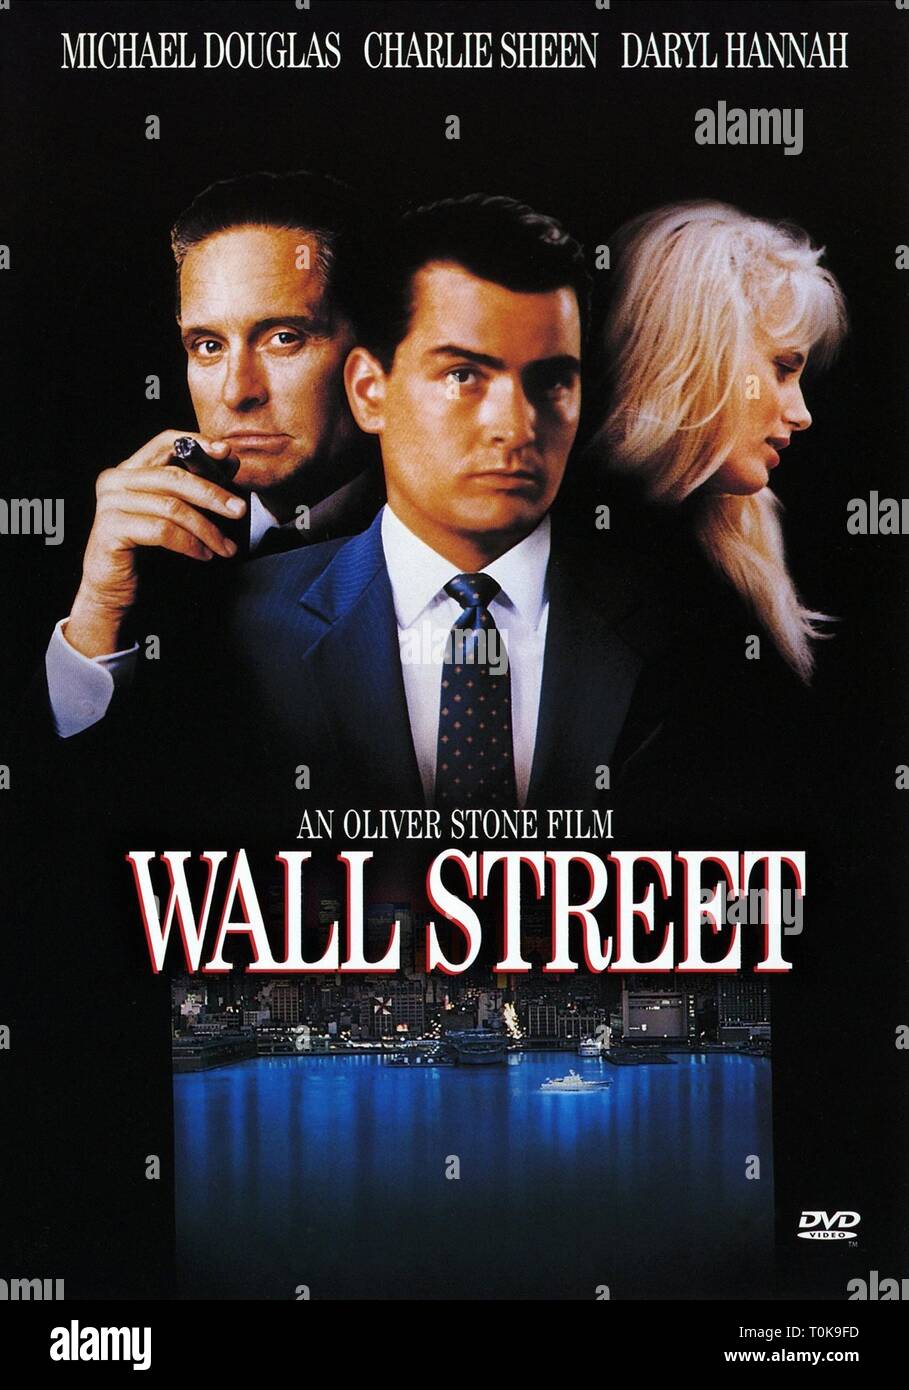 WALL STREET POSTER -1987 Foto stock - Alamy